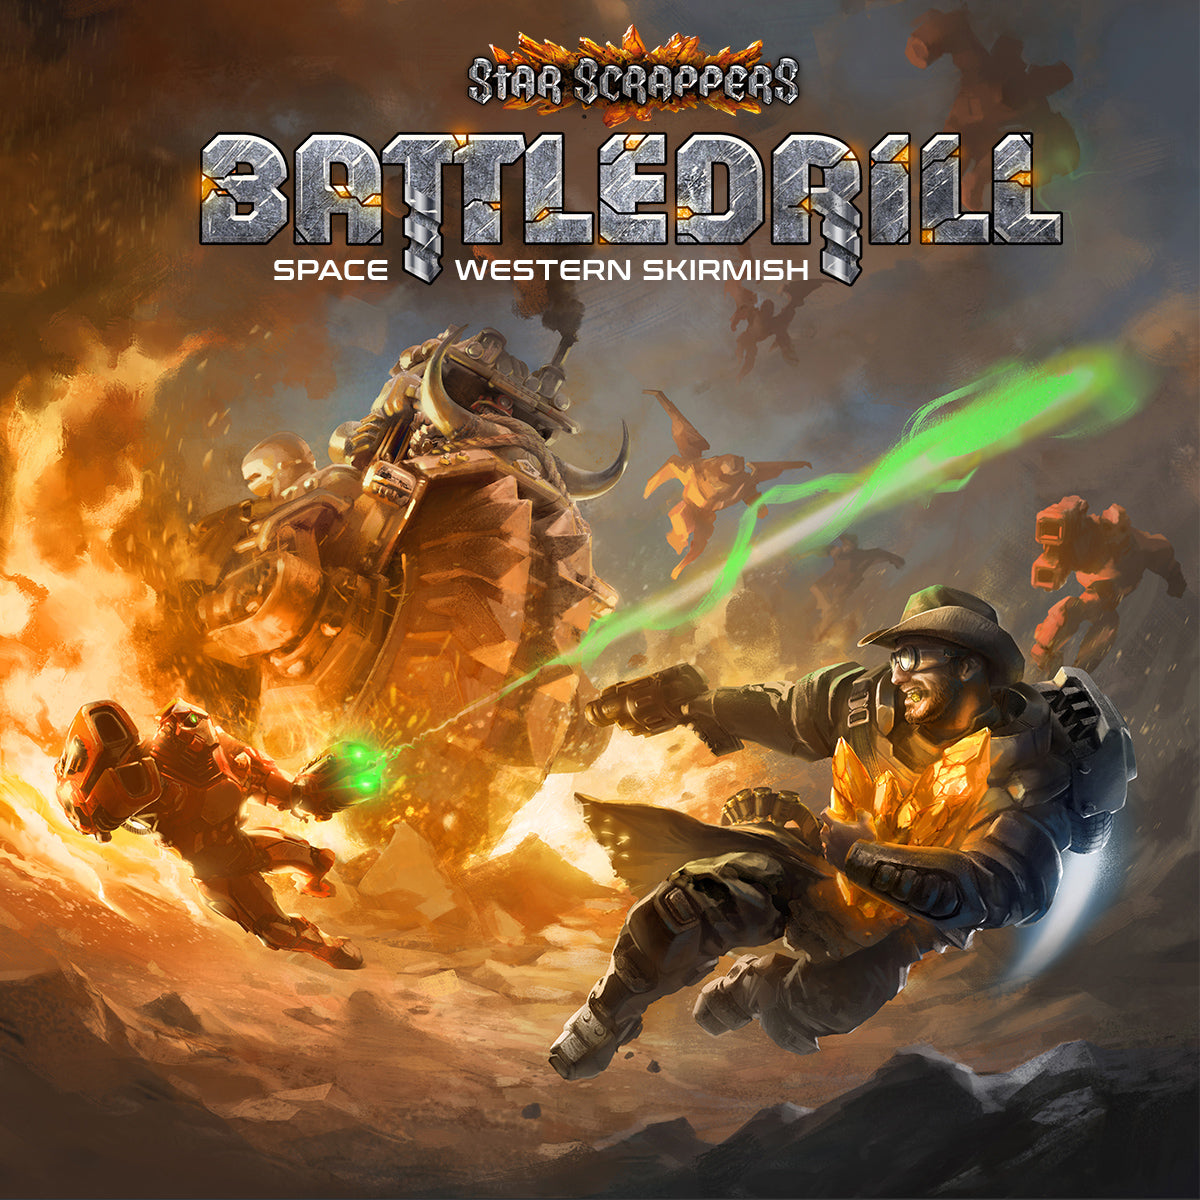 Dofixer Metanel Fraktion Battledrill Kickstarter Brettspiele, Rollenspiel Maler